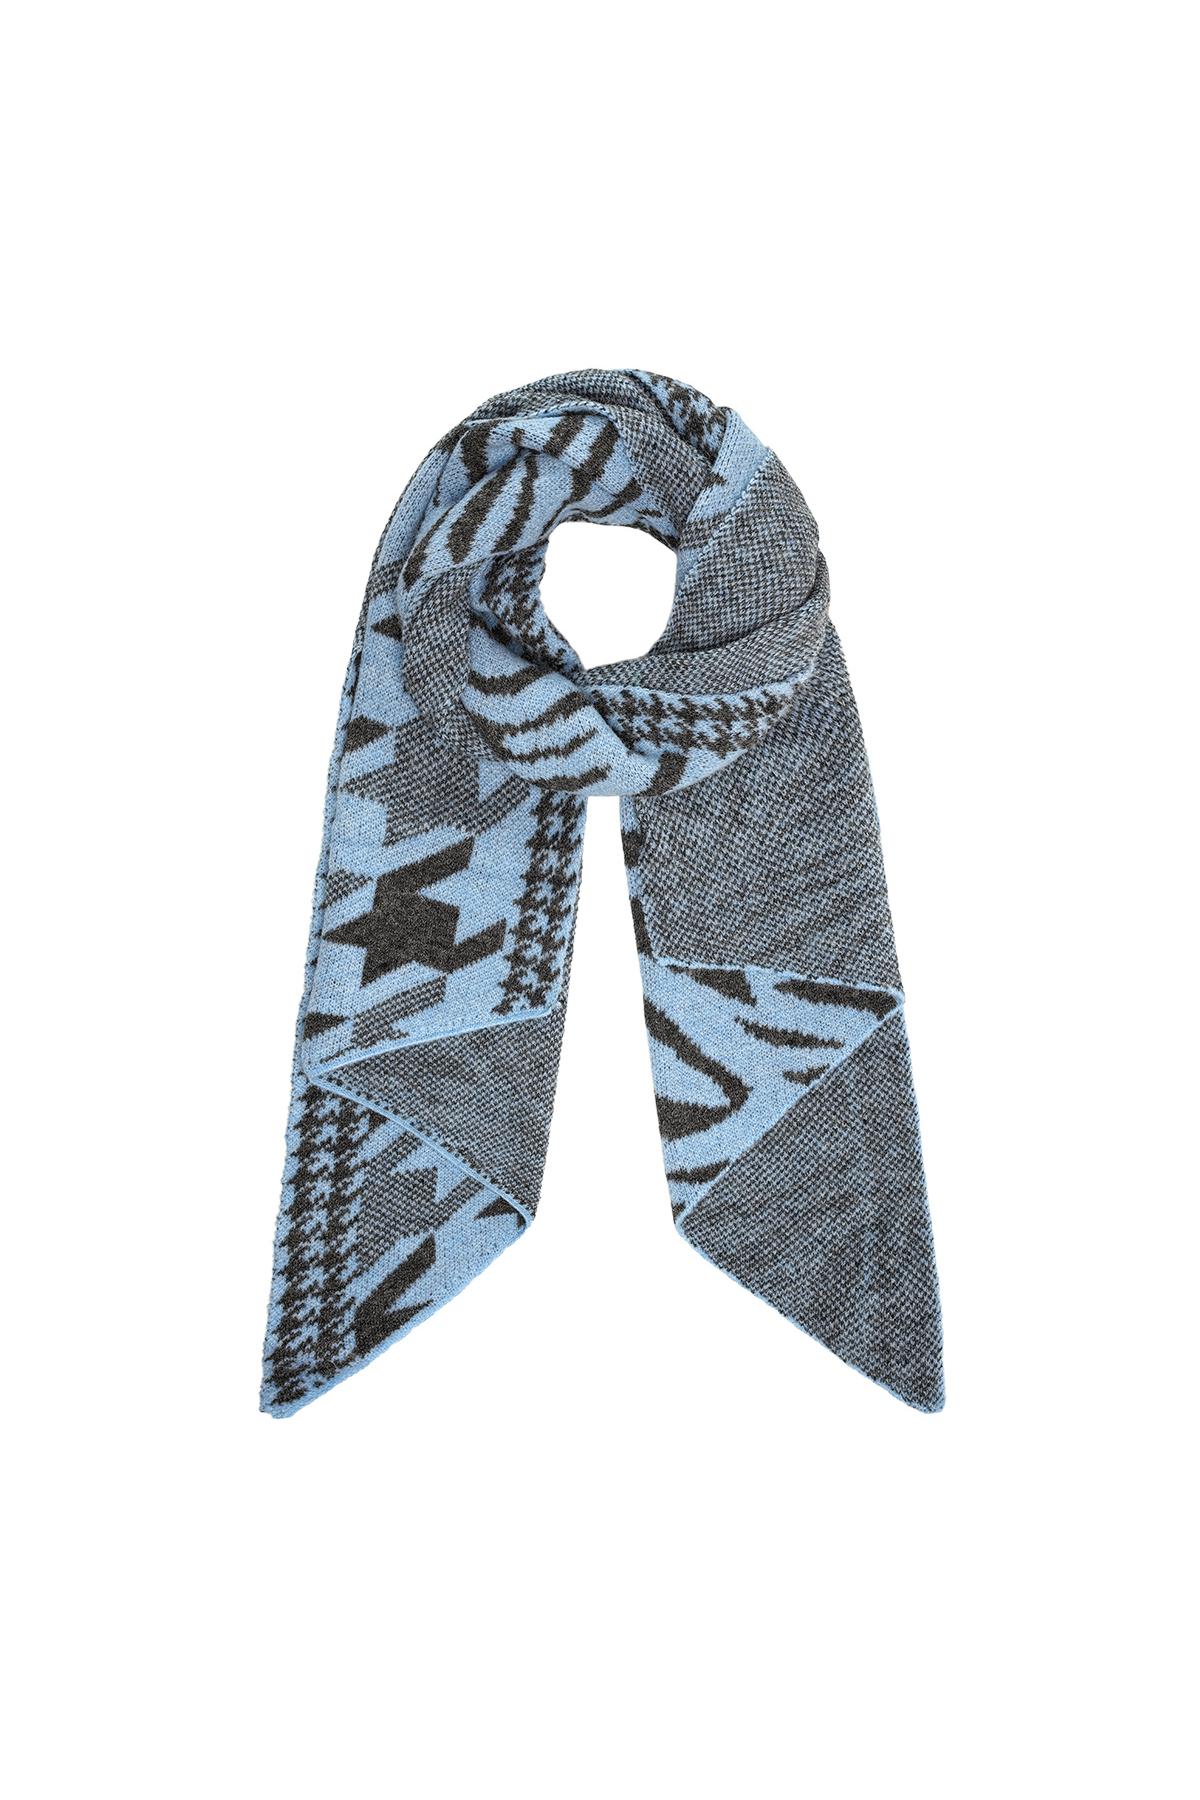 Sjaal gezellig winter Blauw Acryl 